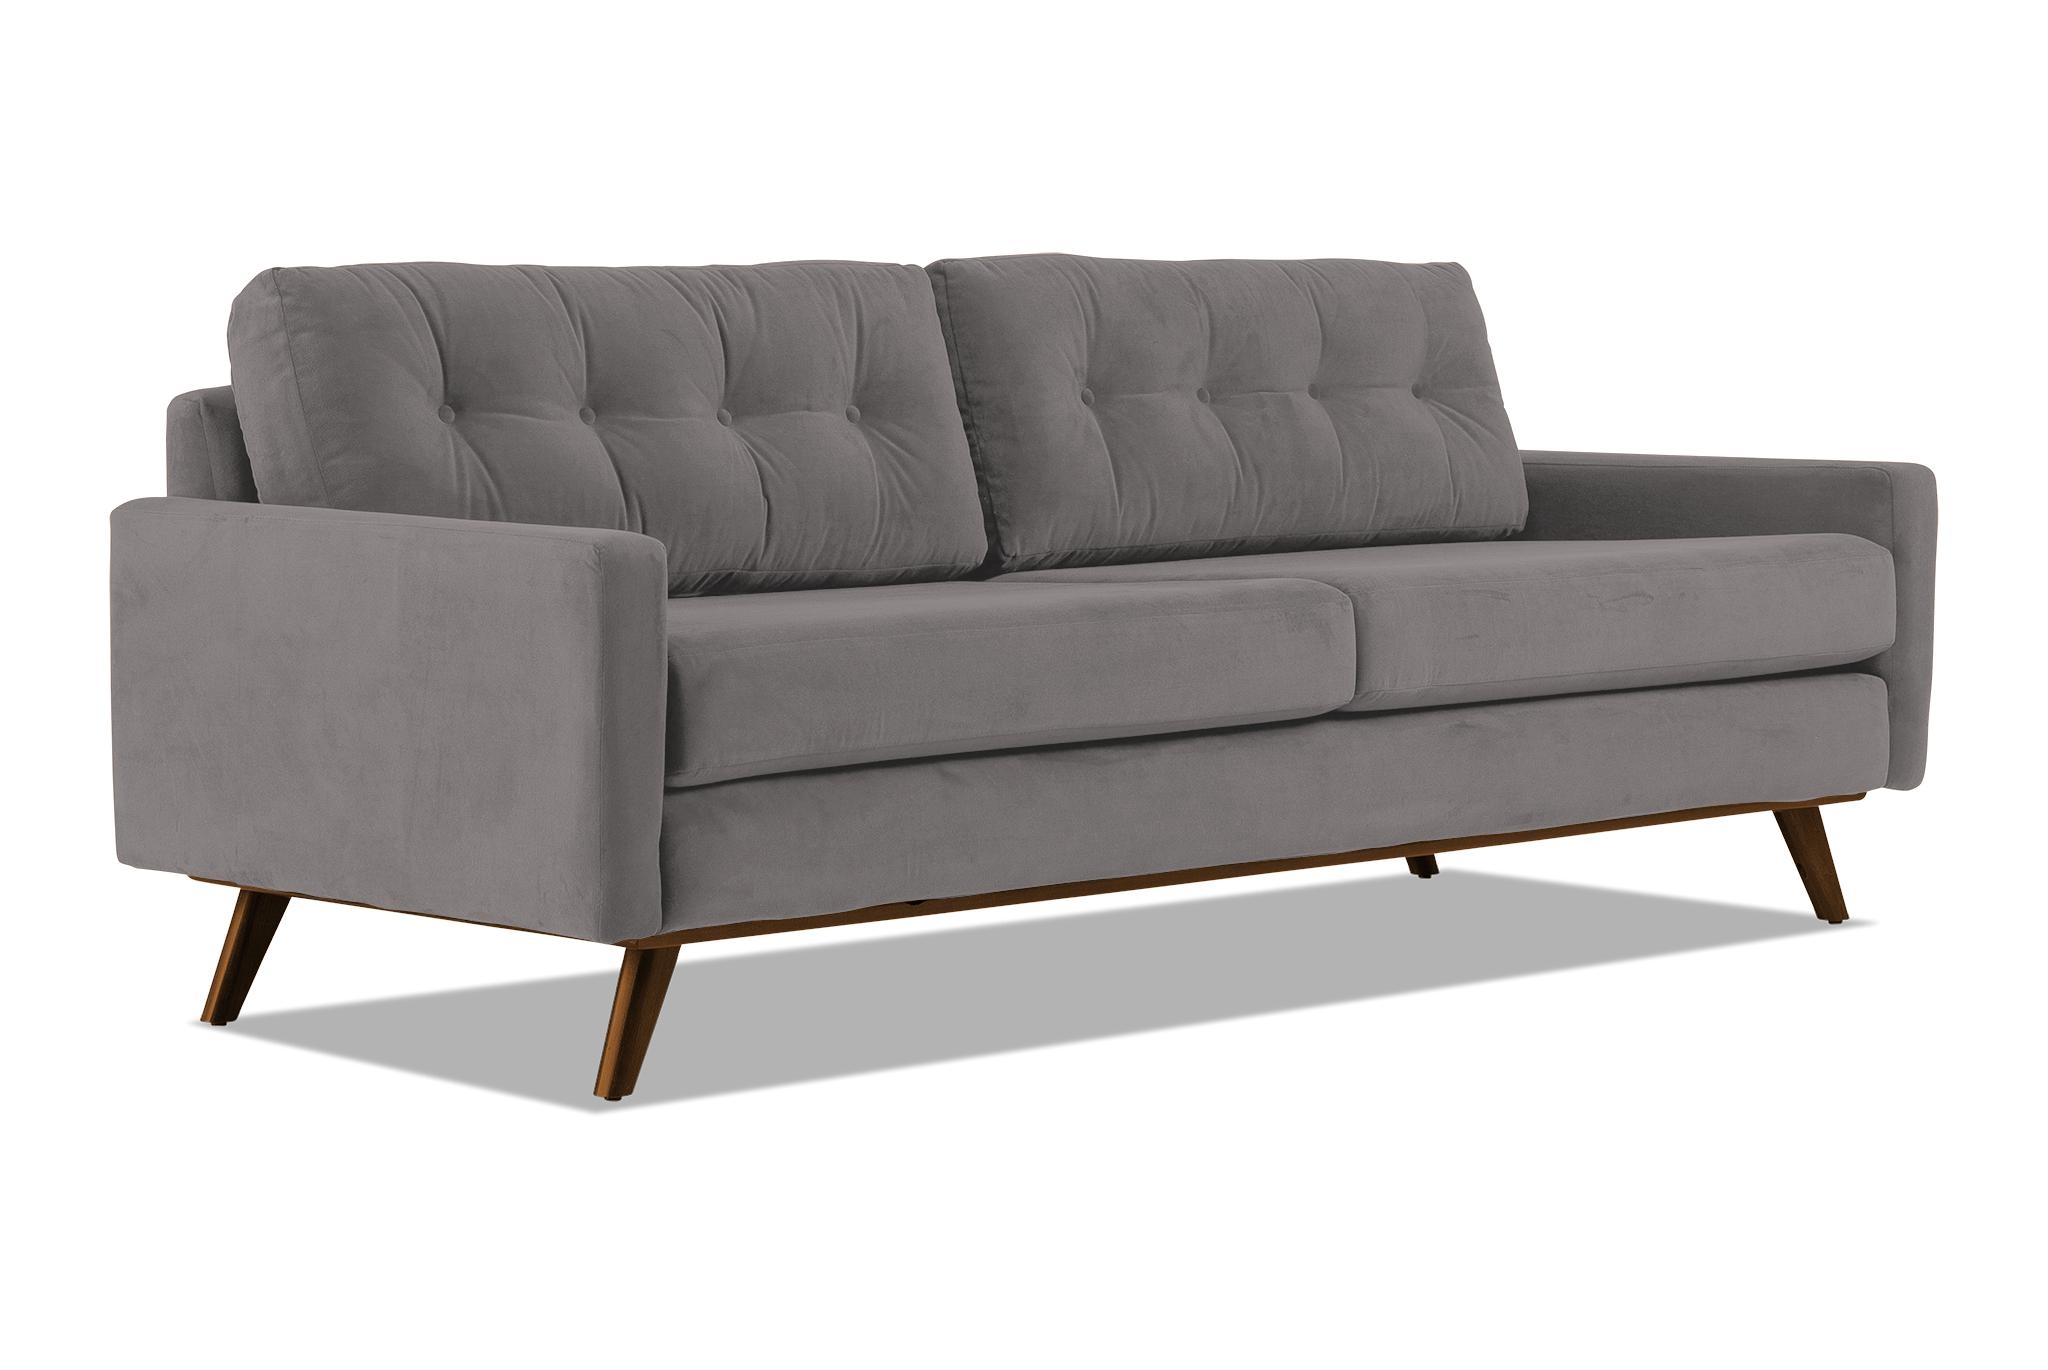 Gray Hopson Mid Century Modern Sofa - Taylor Felt Grey - Mocha - Image 1